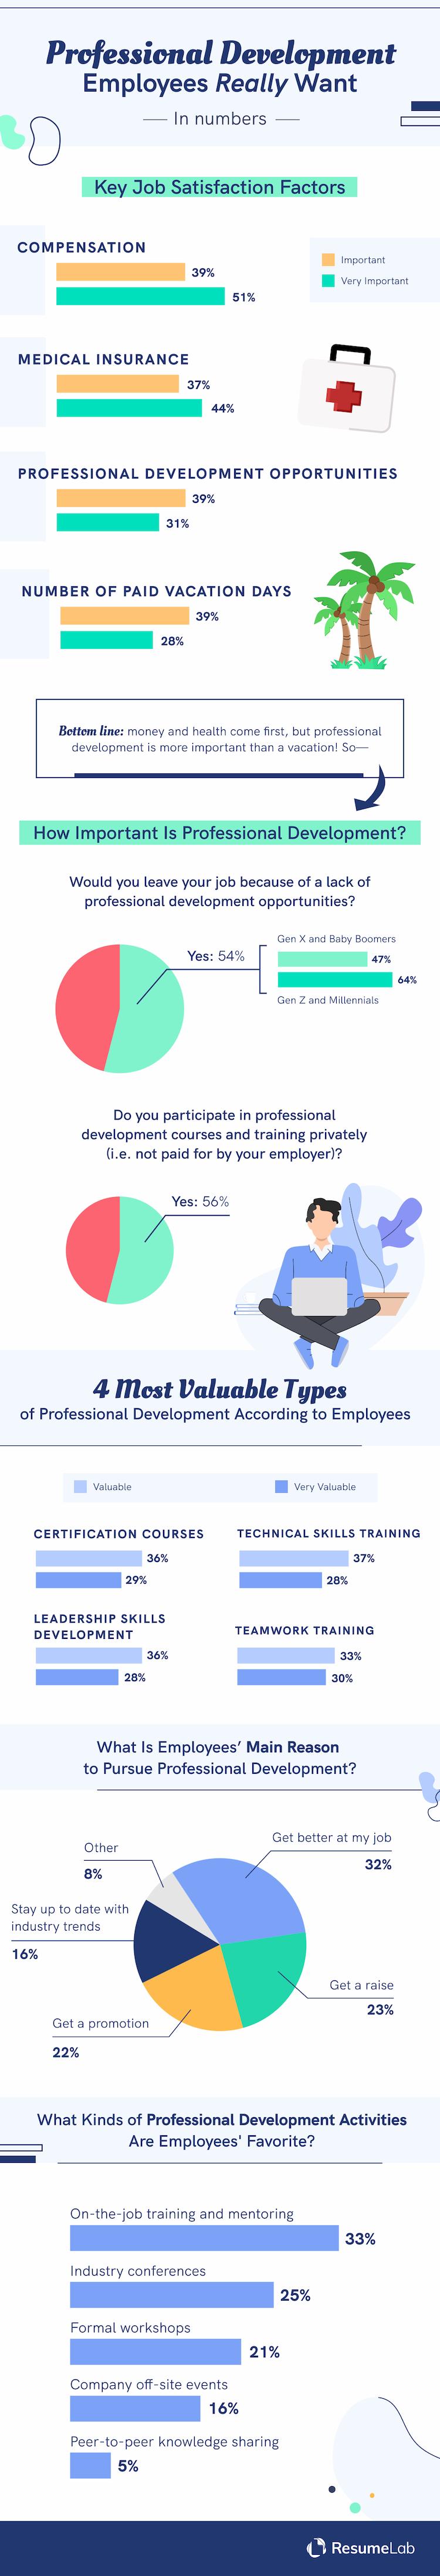 Professional development employees want most